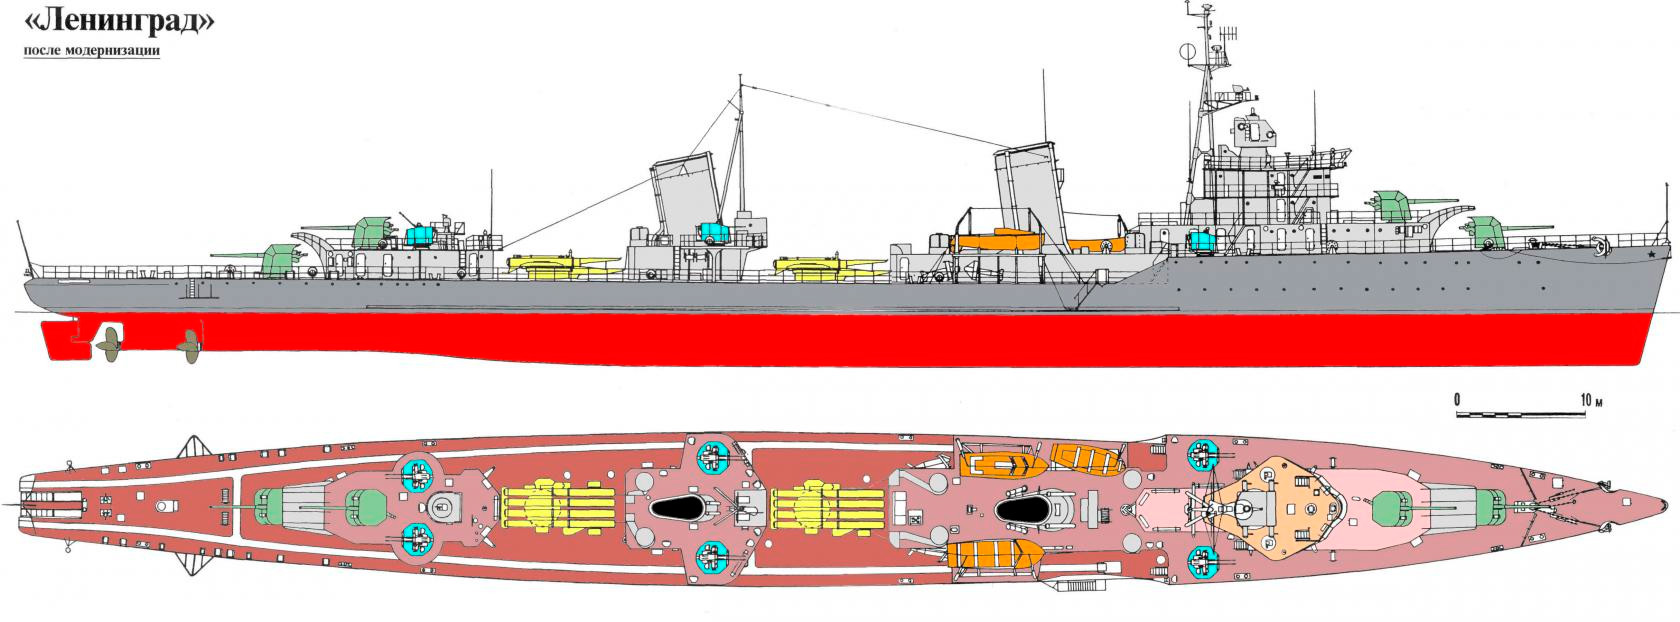 Общий вид лидеров эсминцев типа «Ленинград» (Проект 1)